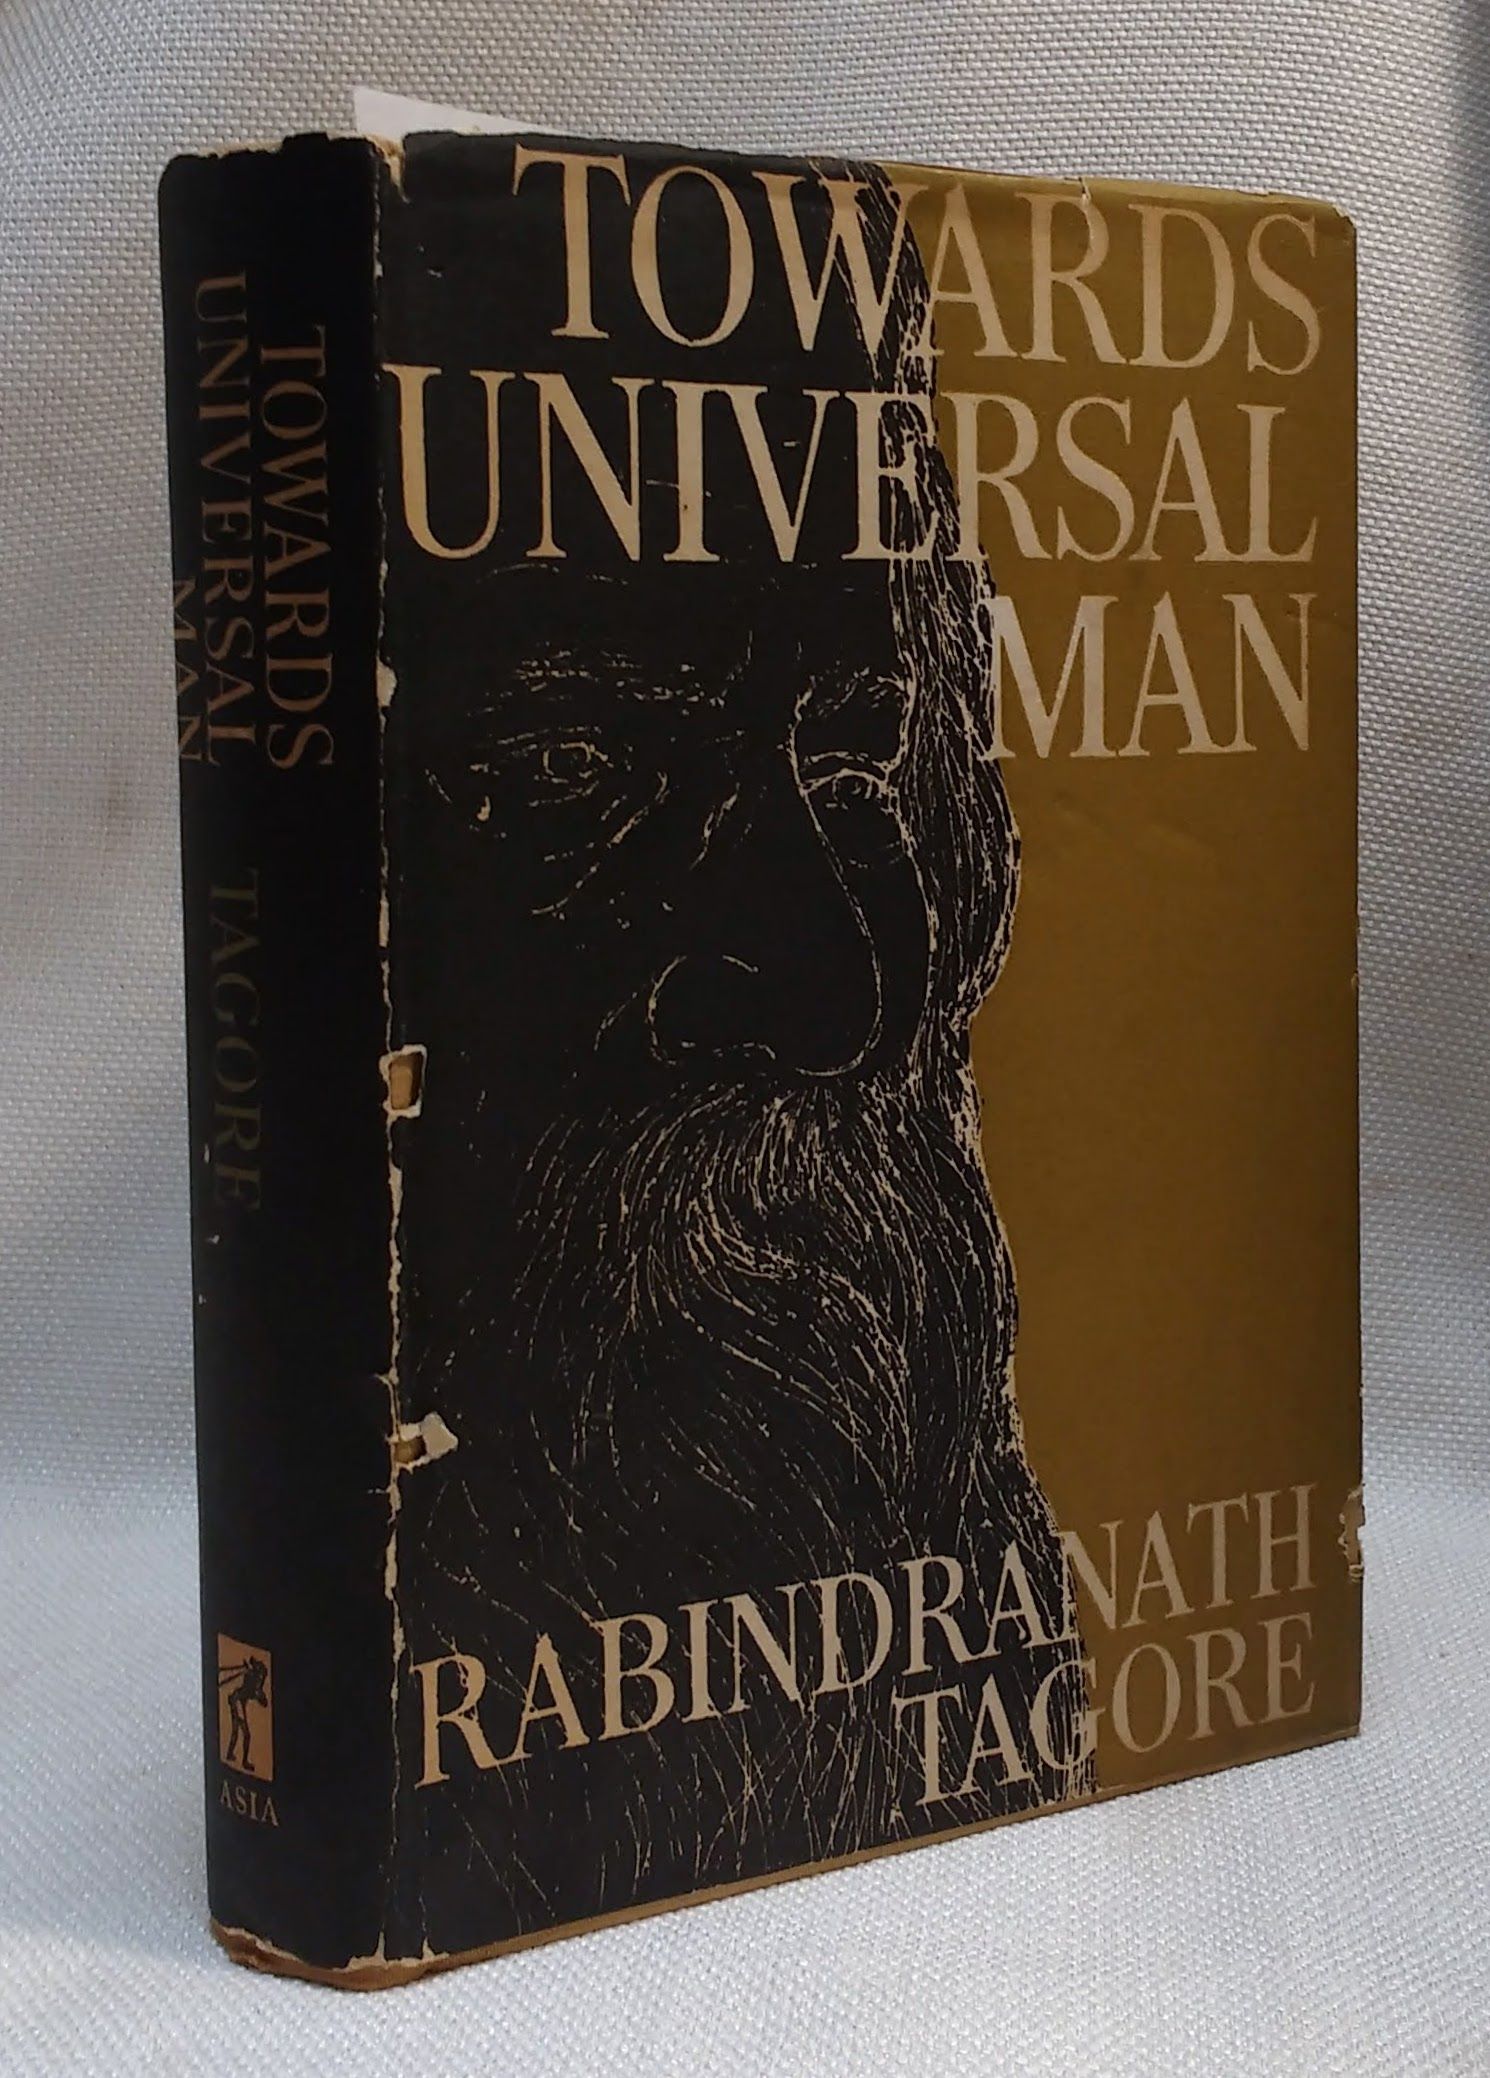 Towards Universal Man by Tagore, Rabindranath: Very Good Hardcover ...